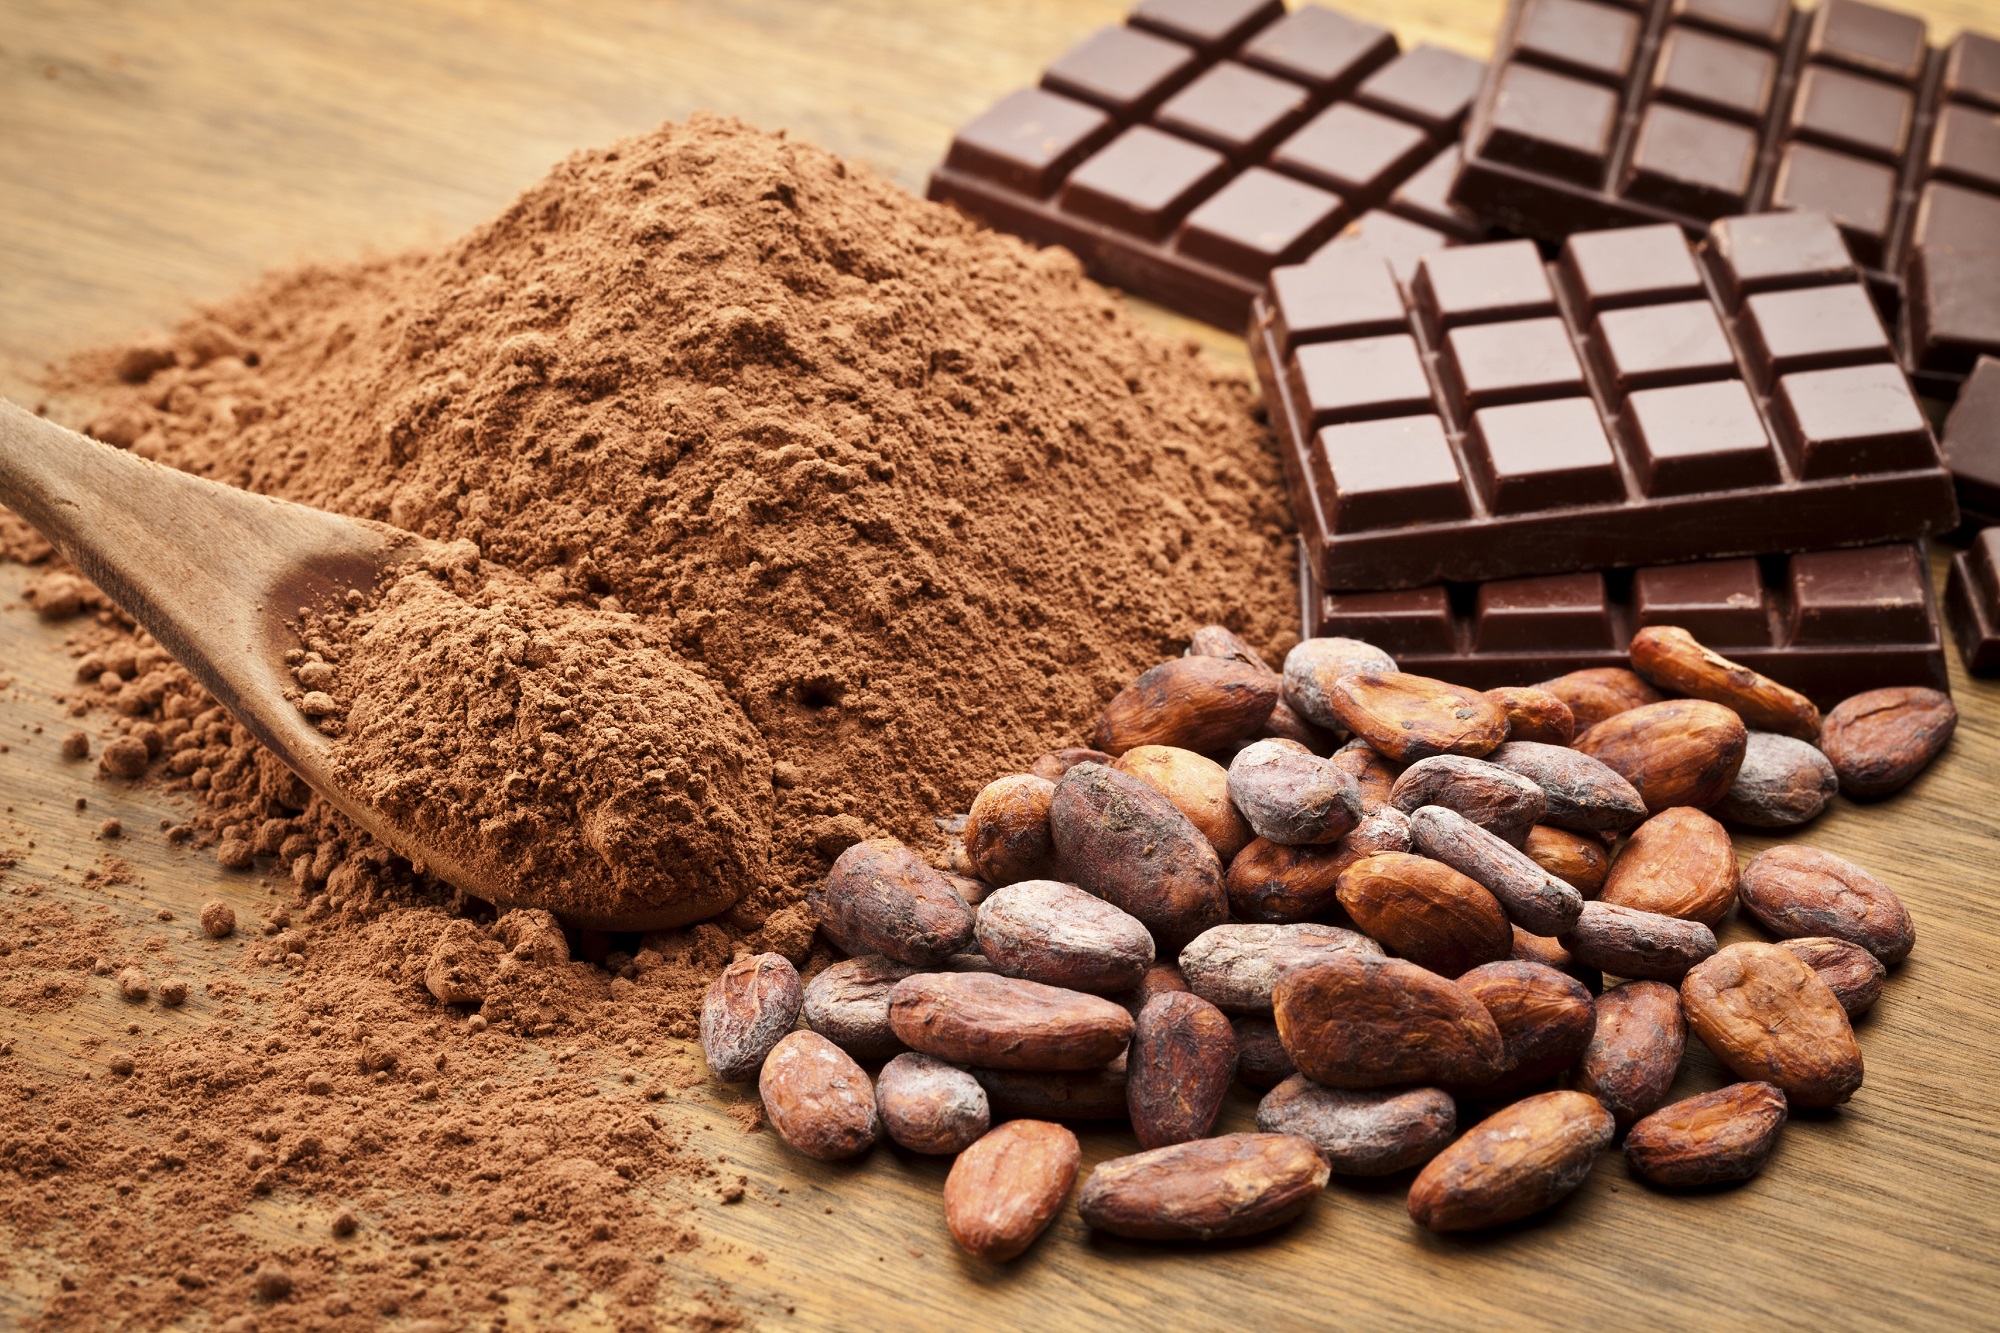 Cocoa-CocoaBeans-Chocolate-Africa-VA.jpg